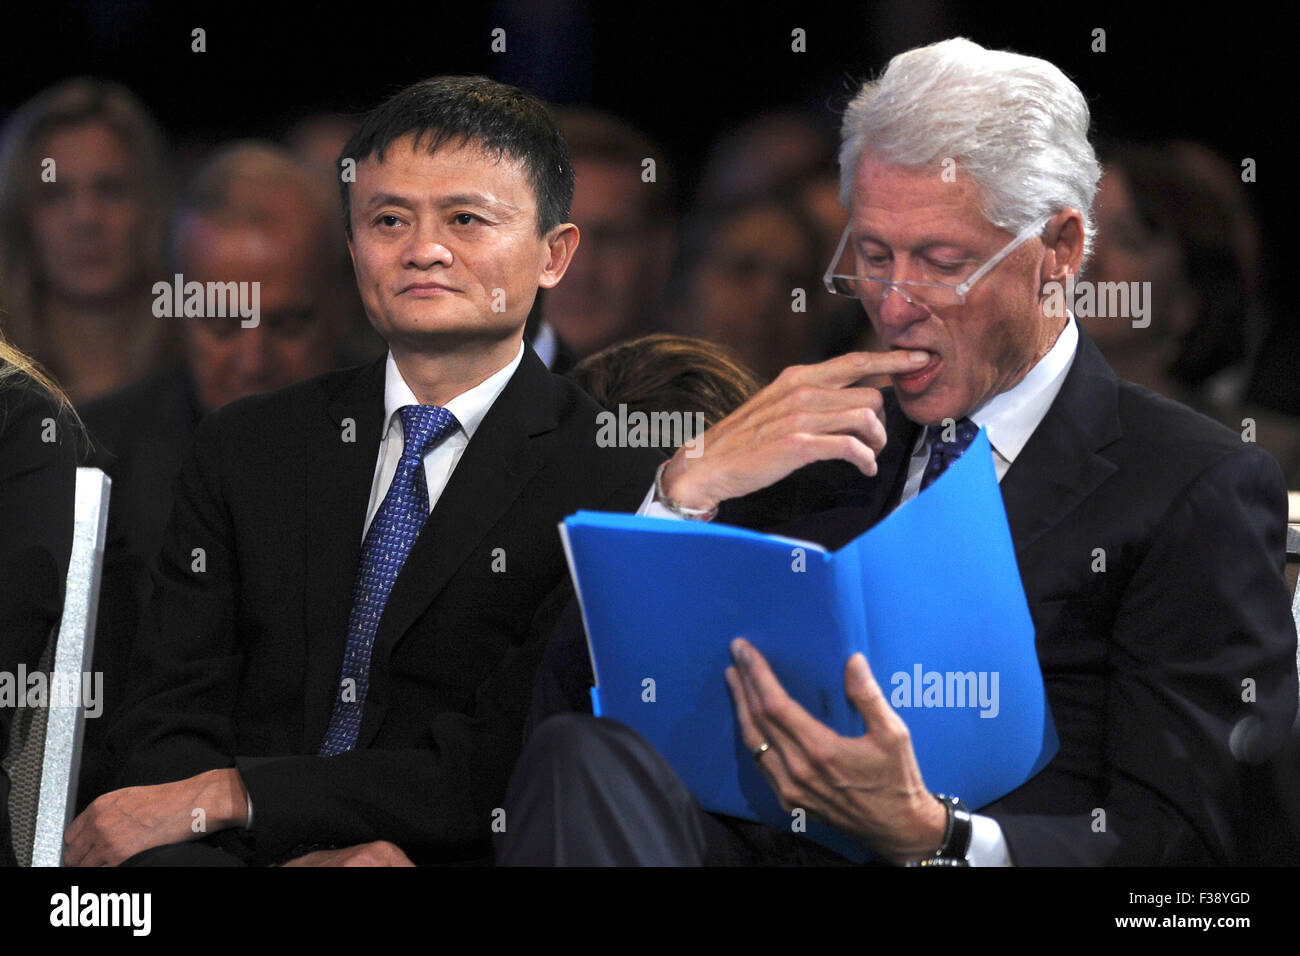 Jack Ma und Bill Clinton bei der Abschlussfeier der Clinton Global Initiative 2015 im Hotel Sheraton Times Square in New York am 29. September. Stockfoto